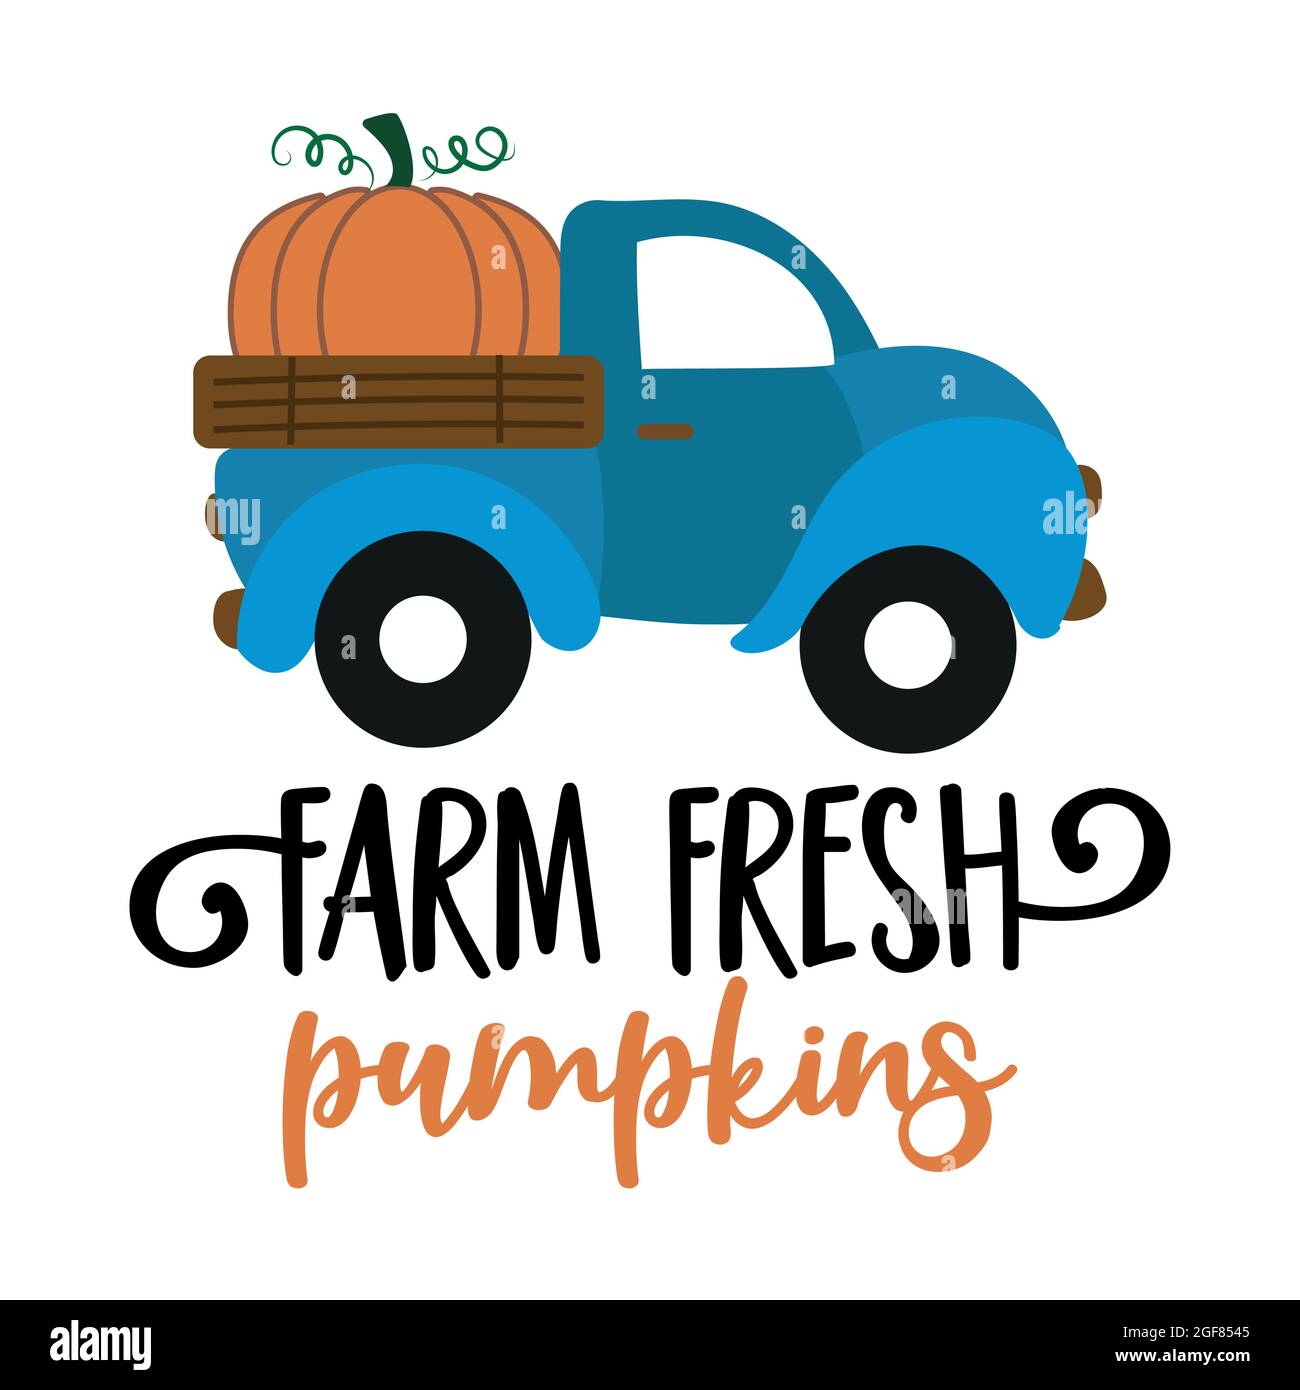 Farm fresh Pumpkins - Happy Harvest fall festival design for markets, restaurants, flyers, cards, invitations, stickers, banners. Cute hand drawn hayr Stock Vector